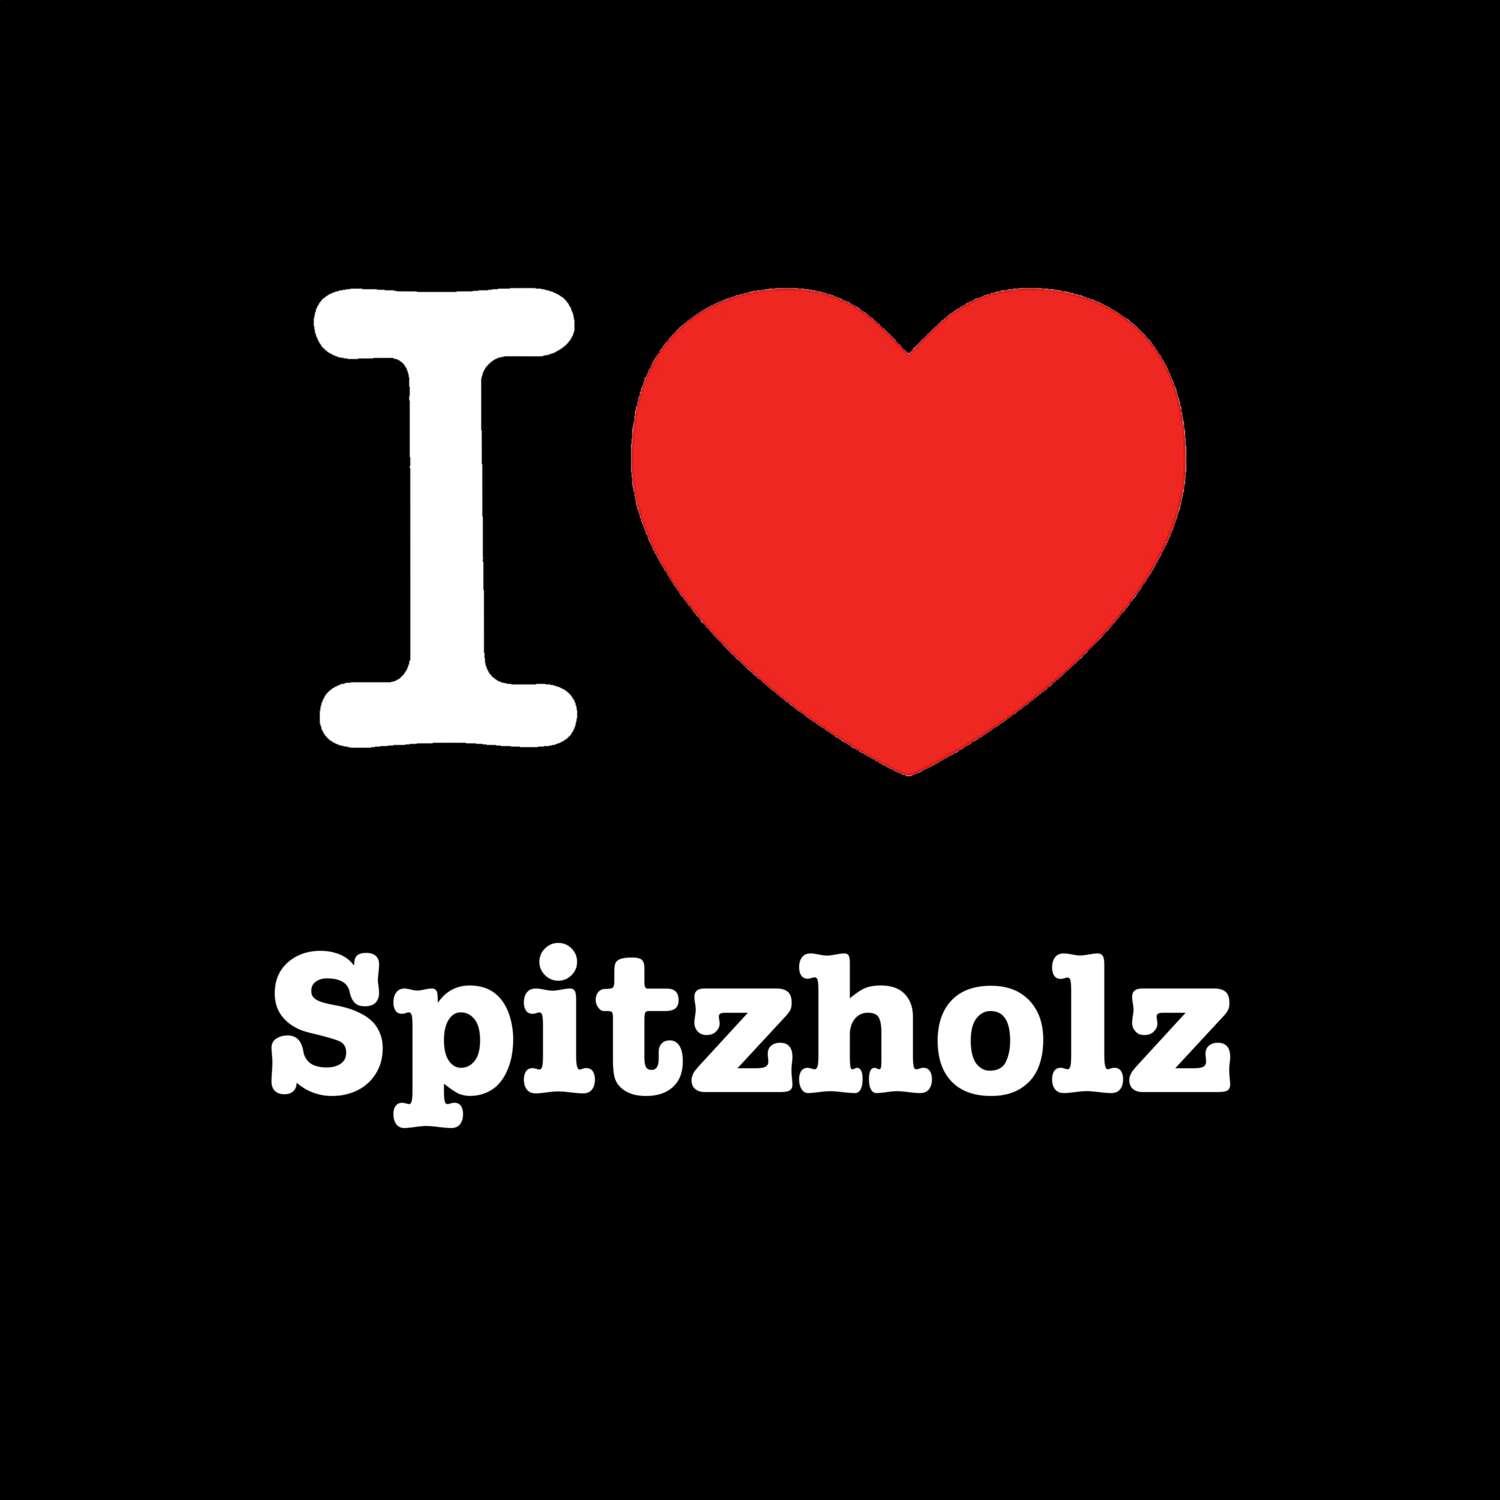 Spitzholz T-Shirt »I love«